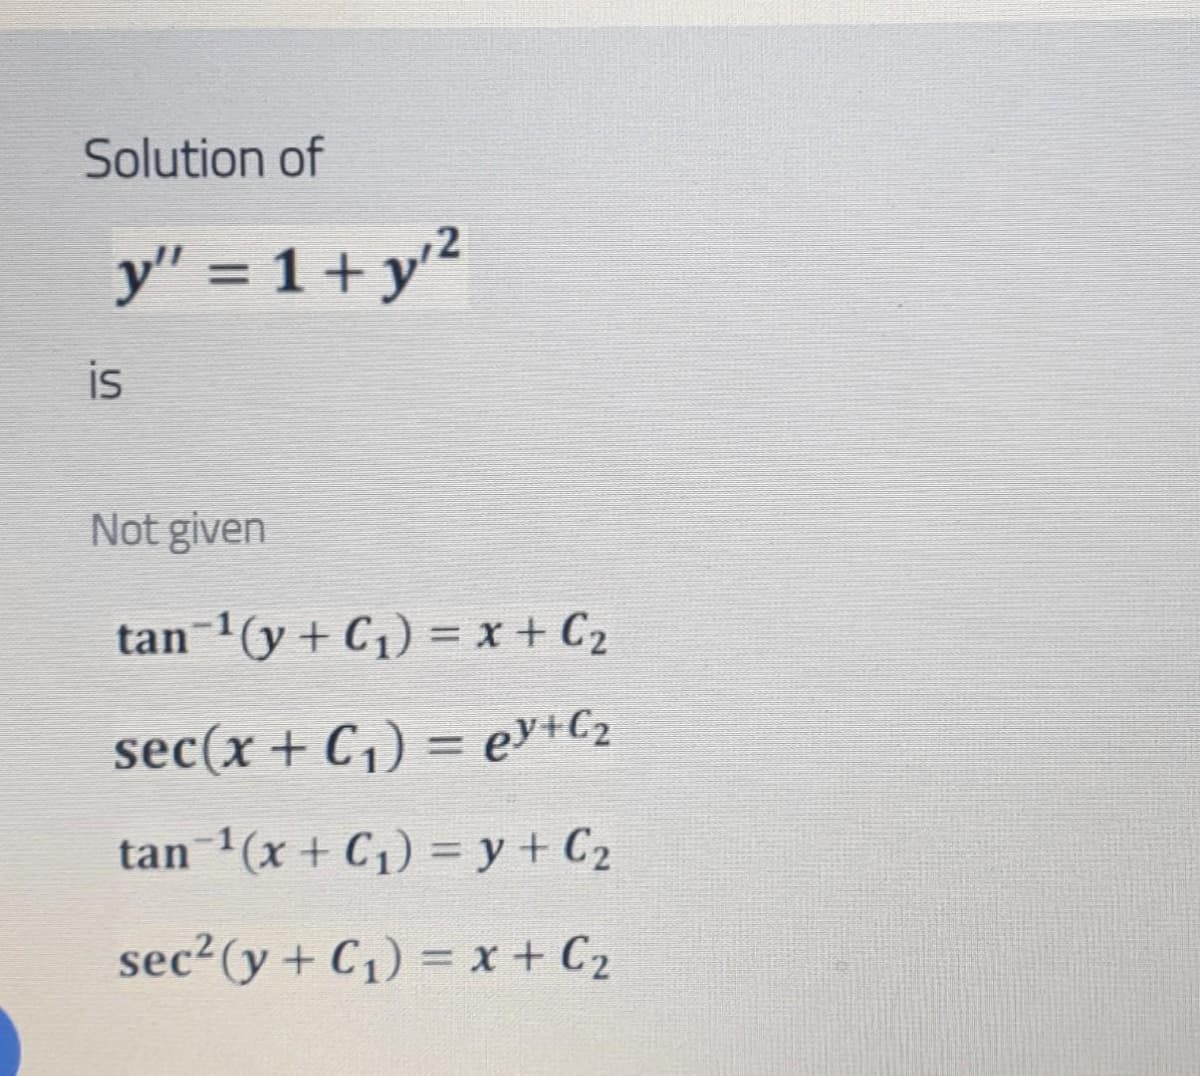 Solution of
y" = 1 + y2
%3D
is
Not given
tan-(y + C1) = x + C2
%3D
sec(x + C1) = ev+C2
tan(x + C1) = y + C2
sec²(y + C1) = x + C2
